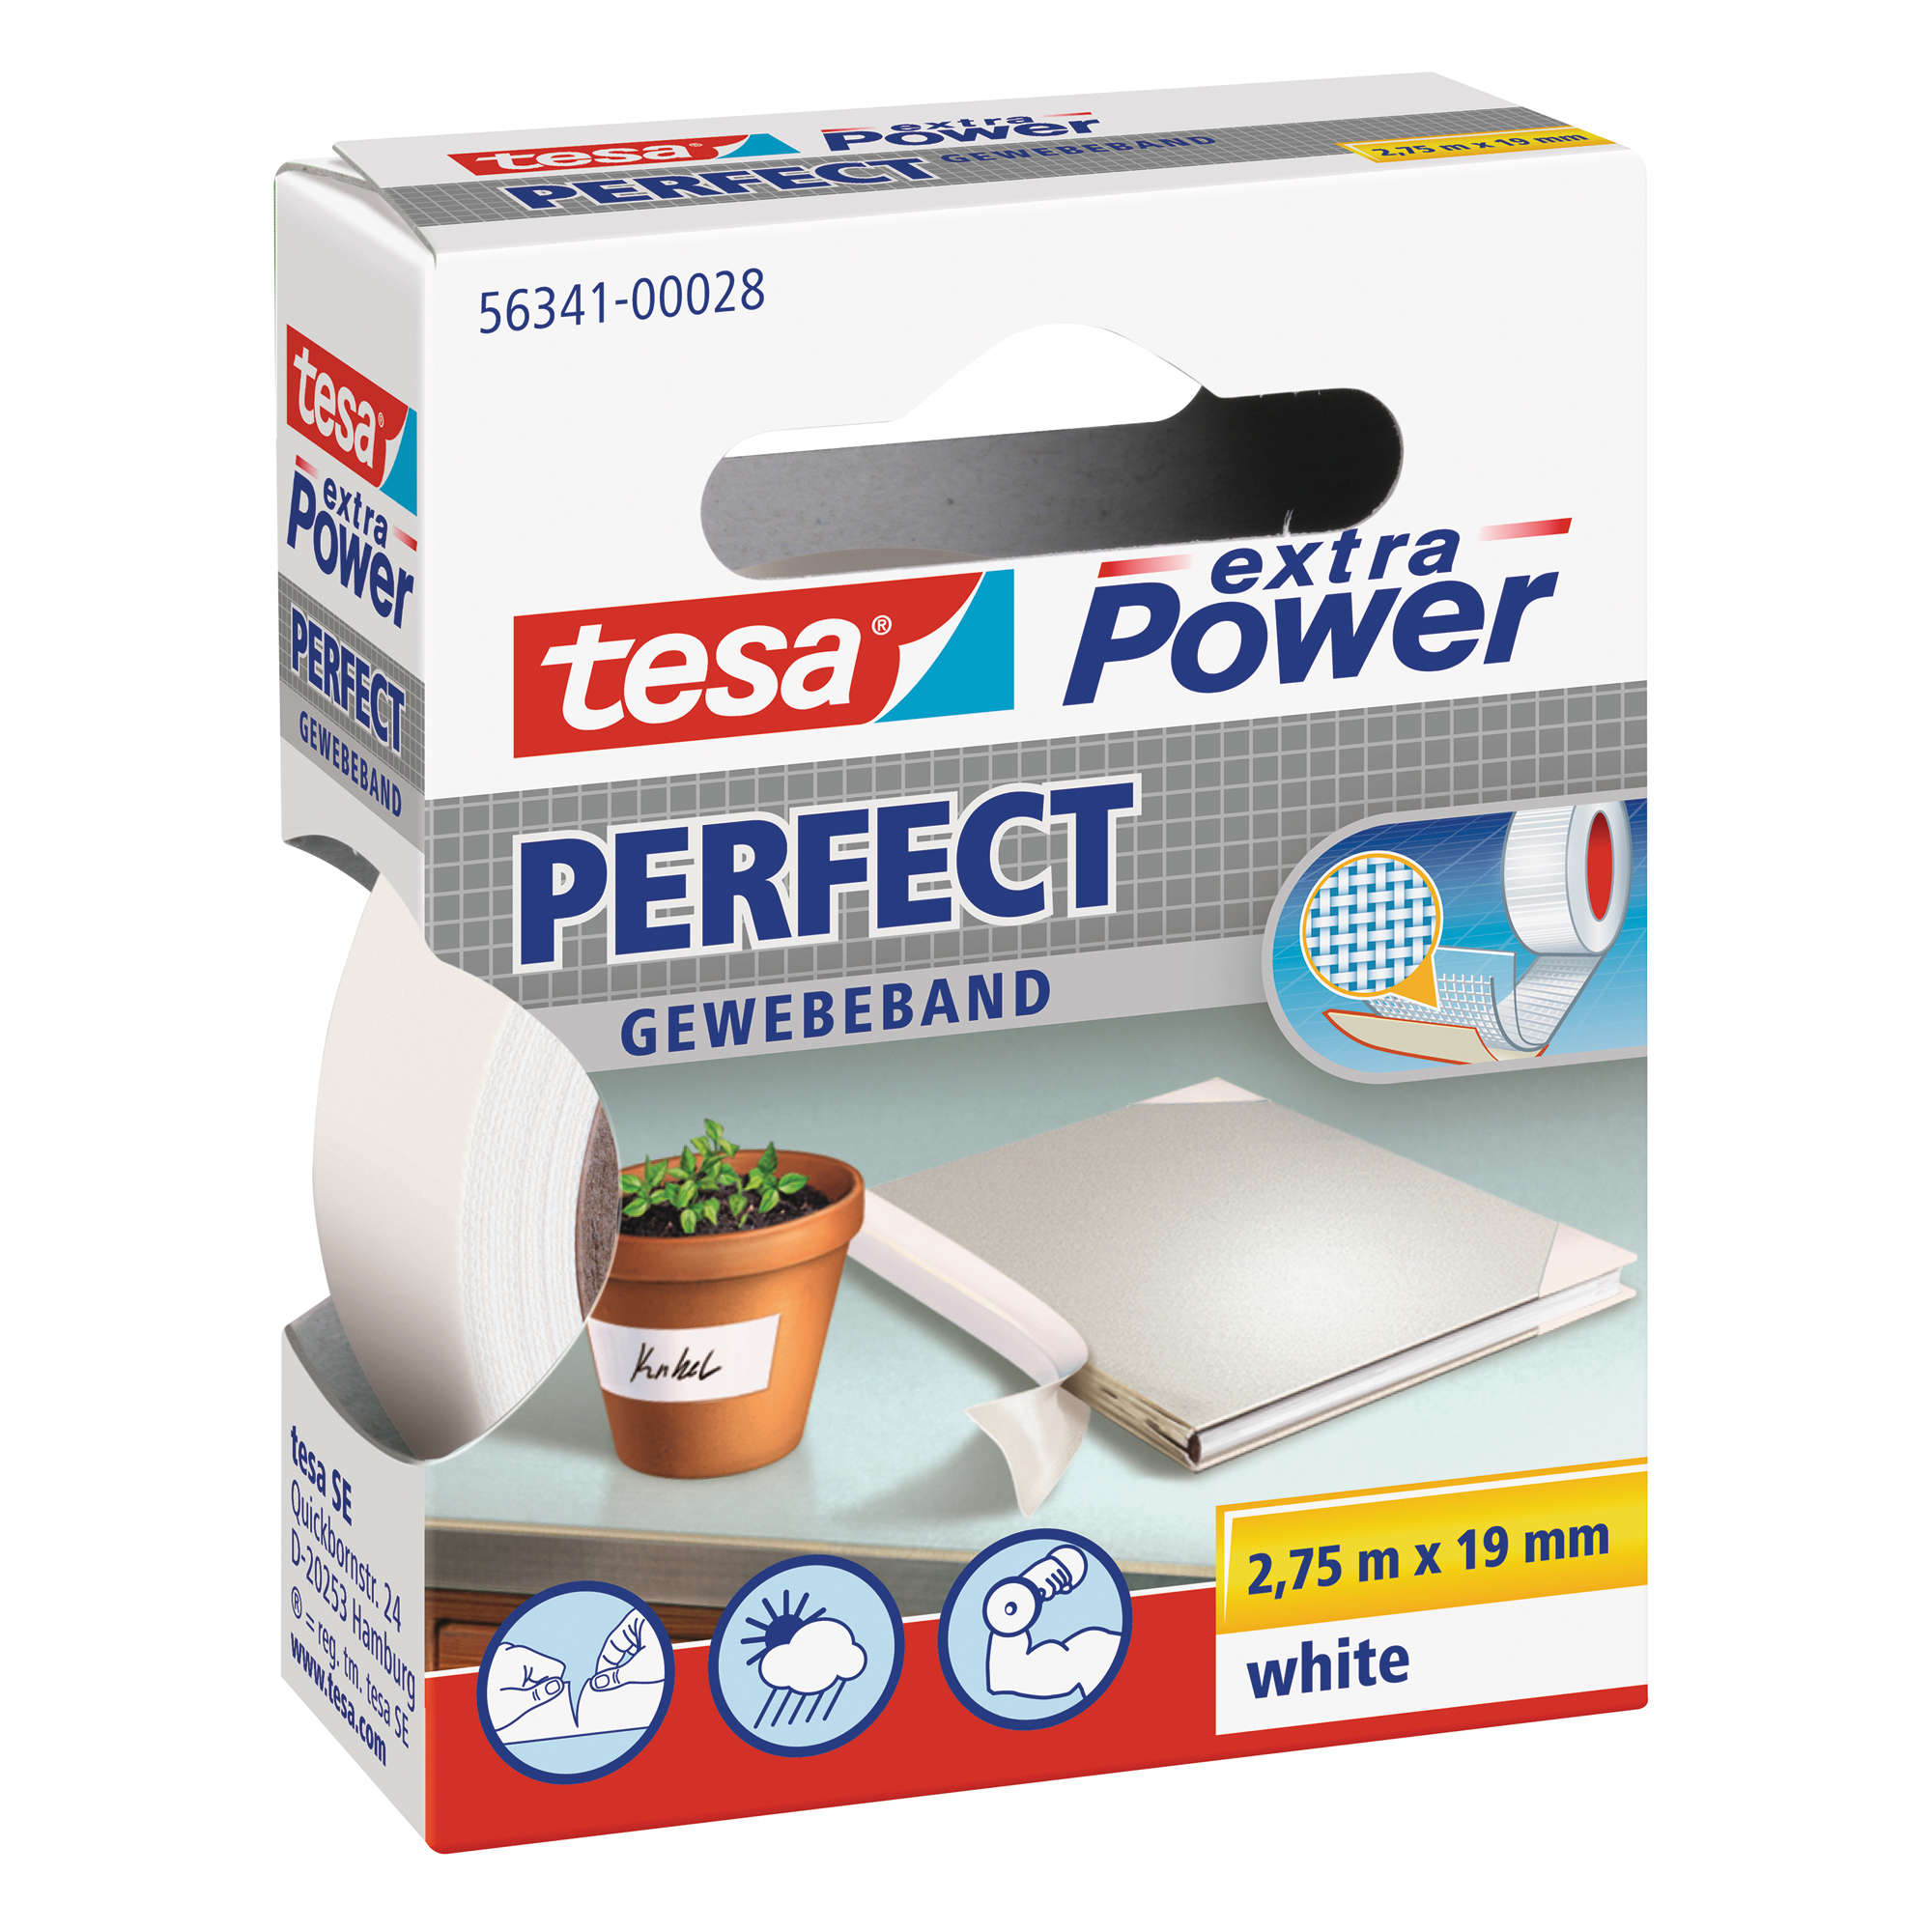 tesa® Gewebeband extra Power® Perfect 19 mm weiß